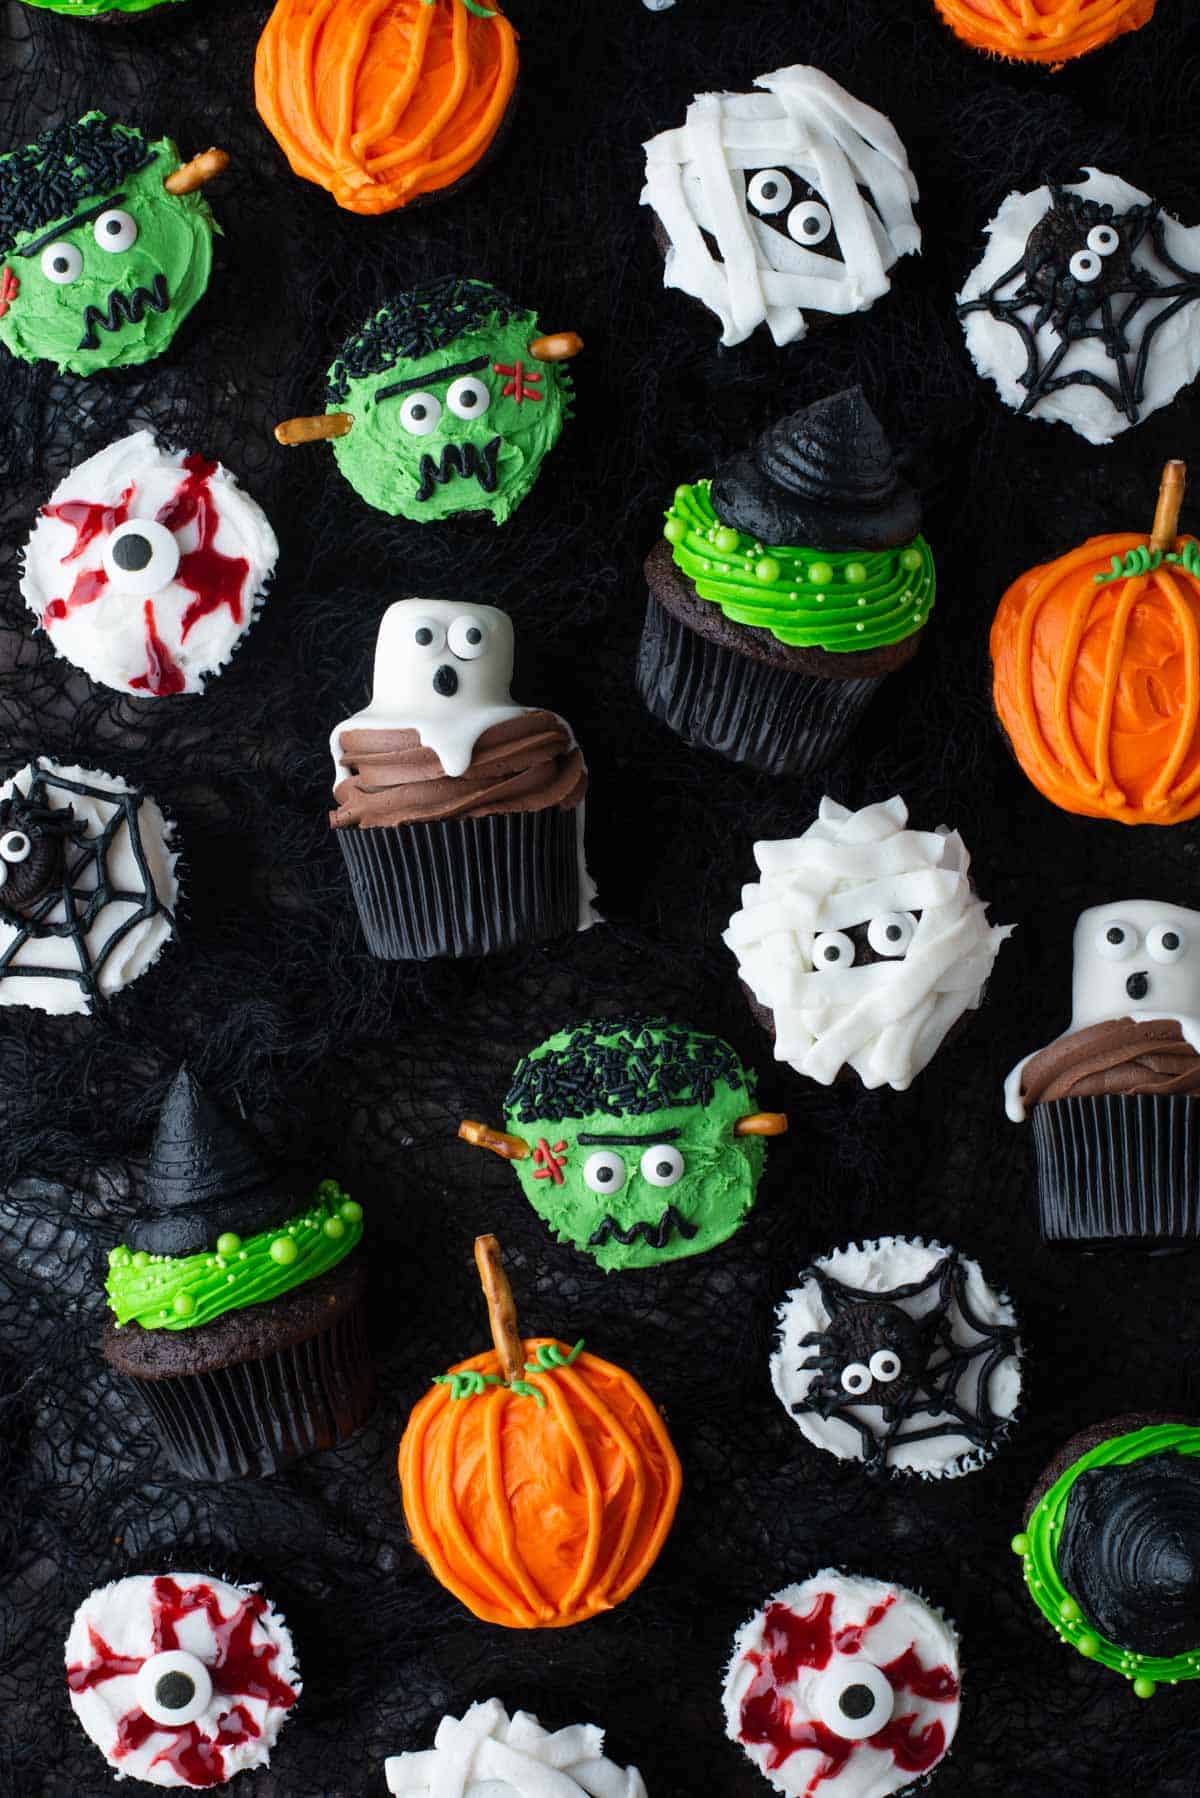 an assortment of Halloween cupcakes including mummy cupcakes, pumpkin patch cupcakes, ghost cupcakes, witch hat cupcakes, eyeball cupcakes and spider web cupcakes